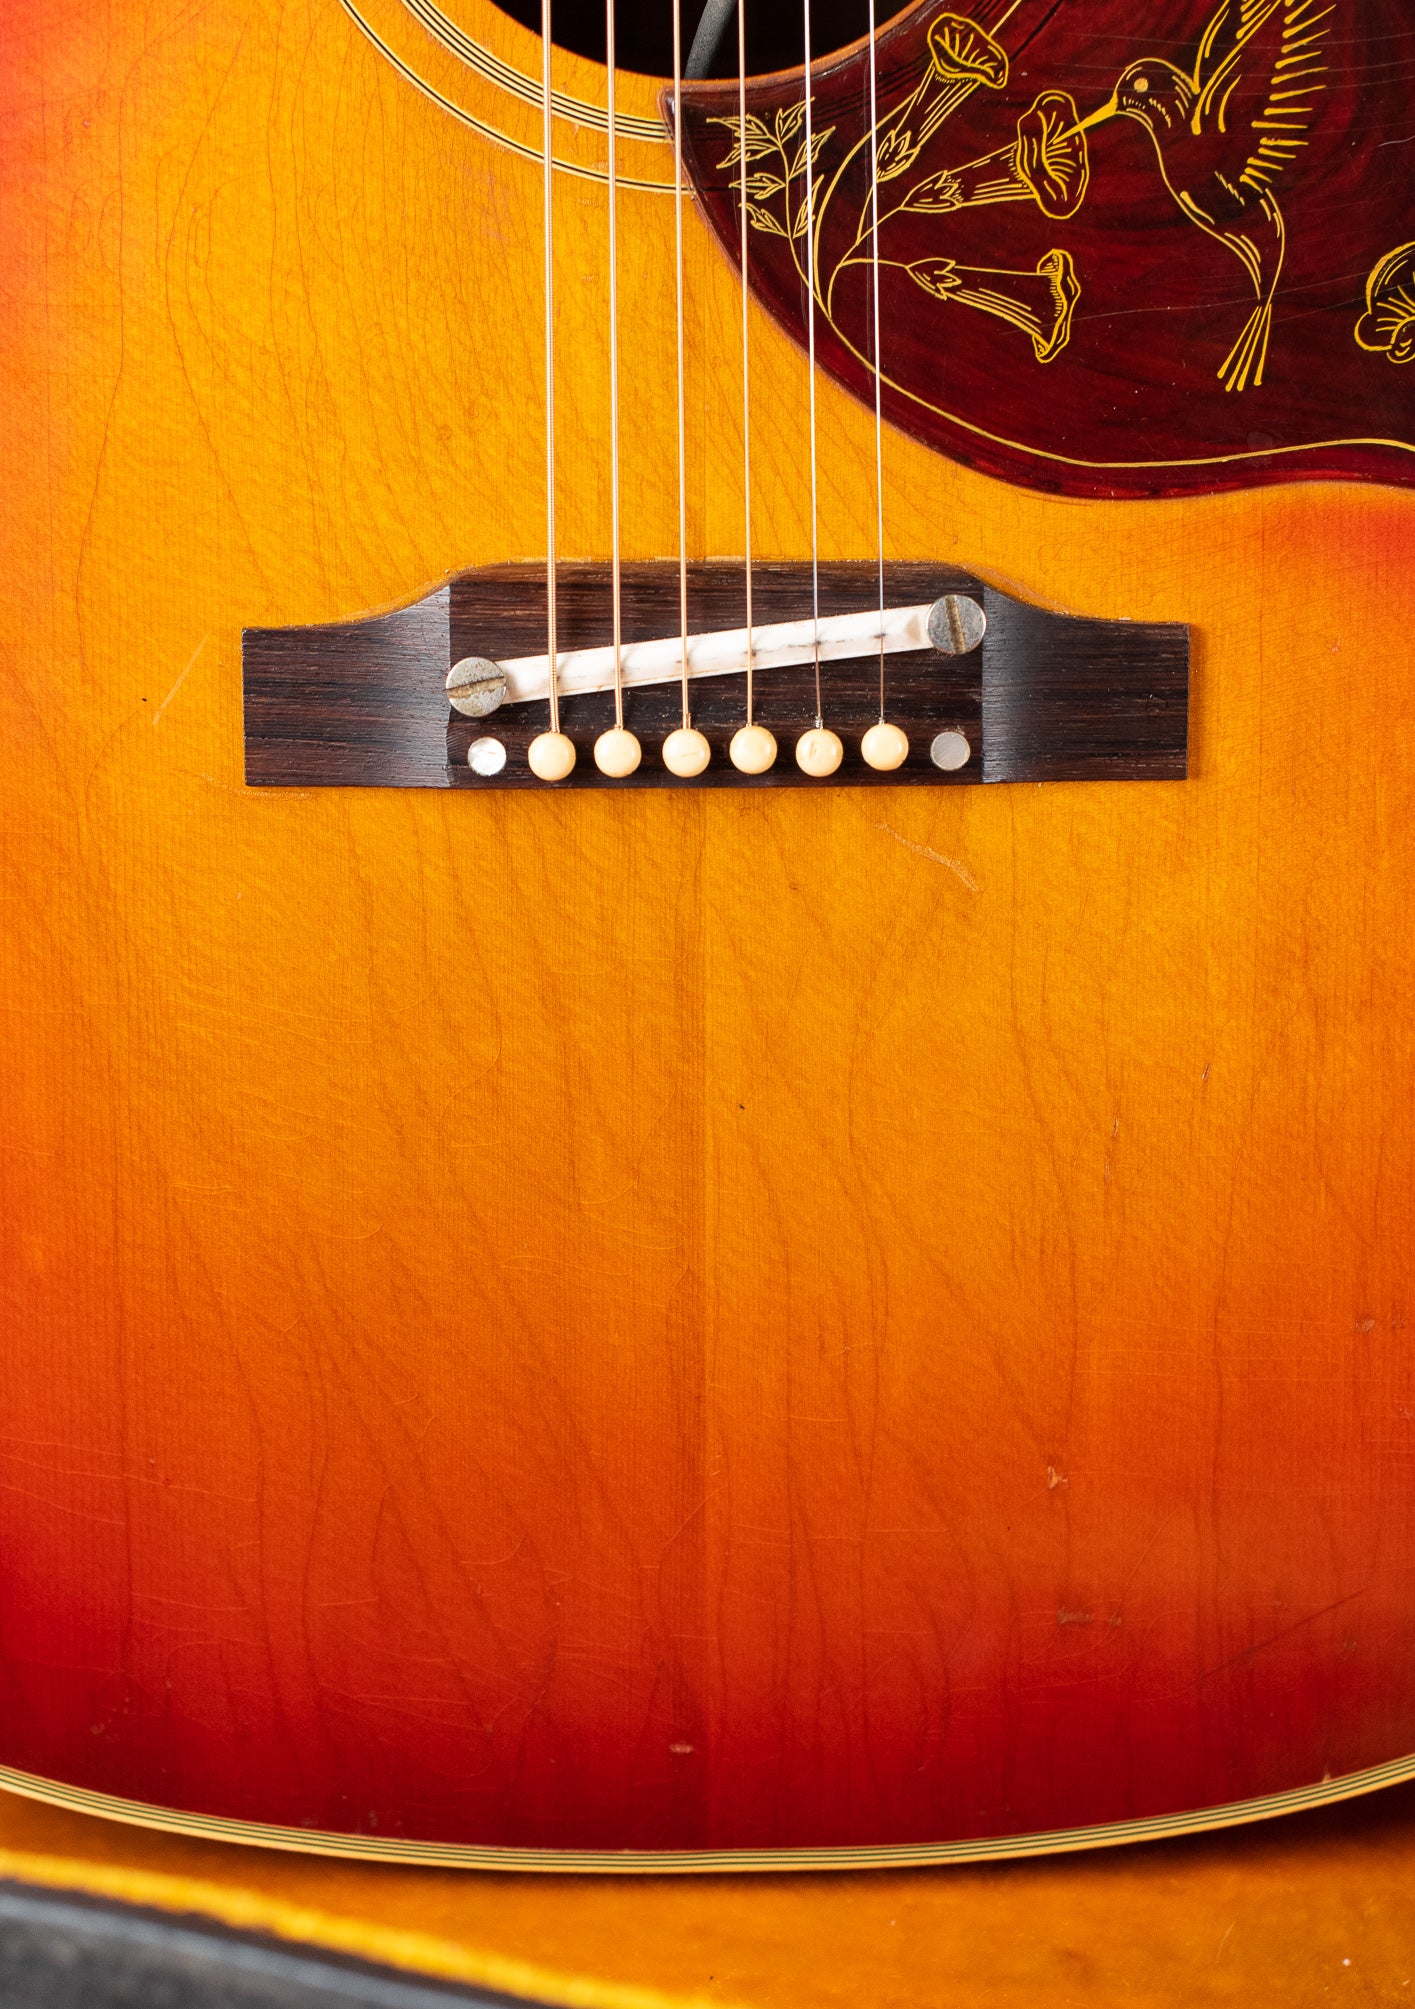 Adjustable bridge, ADJ bridge, 1963 Gibson Hummingbird guitar